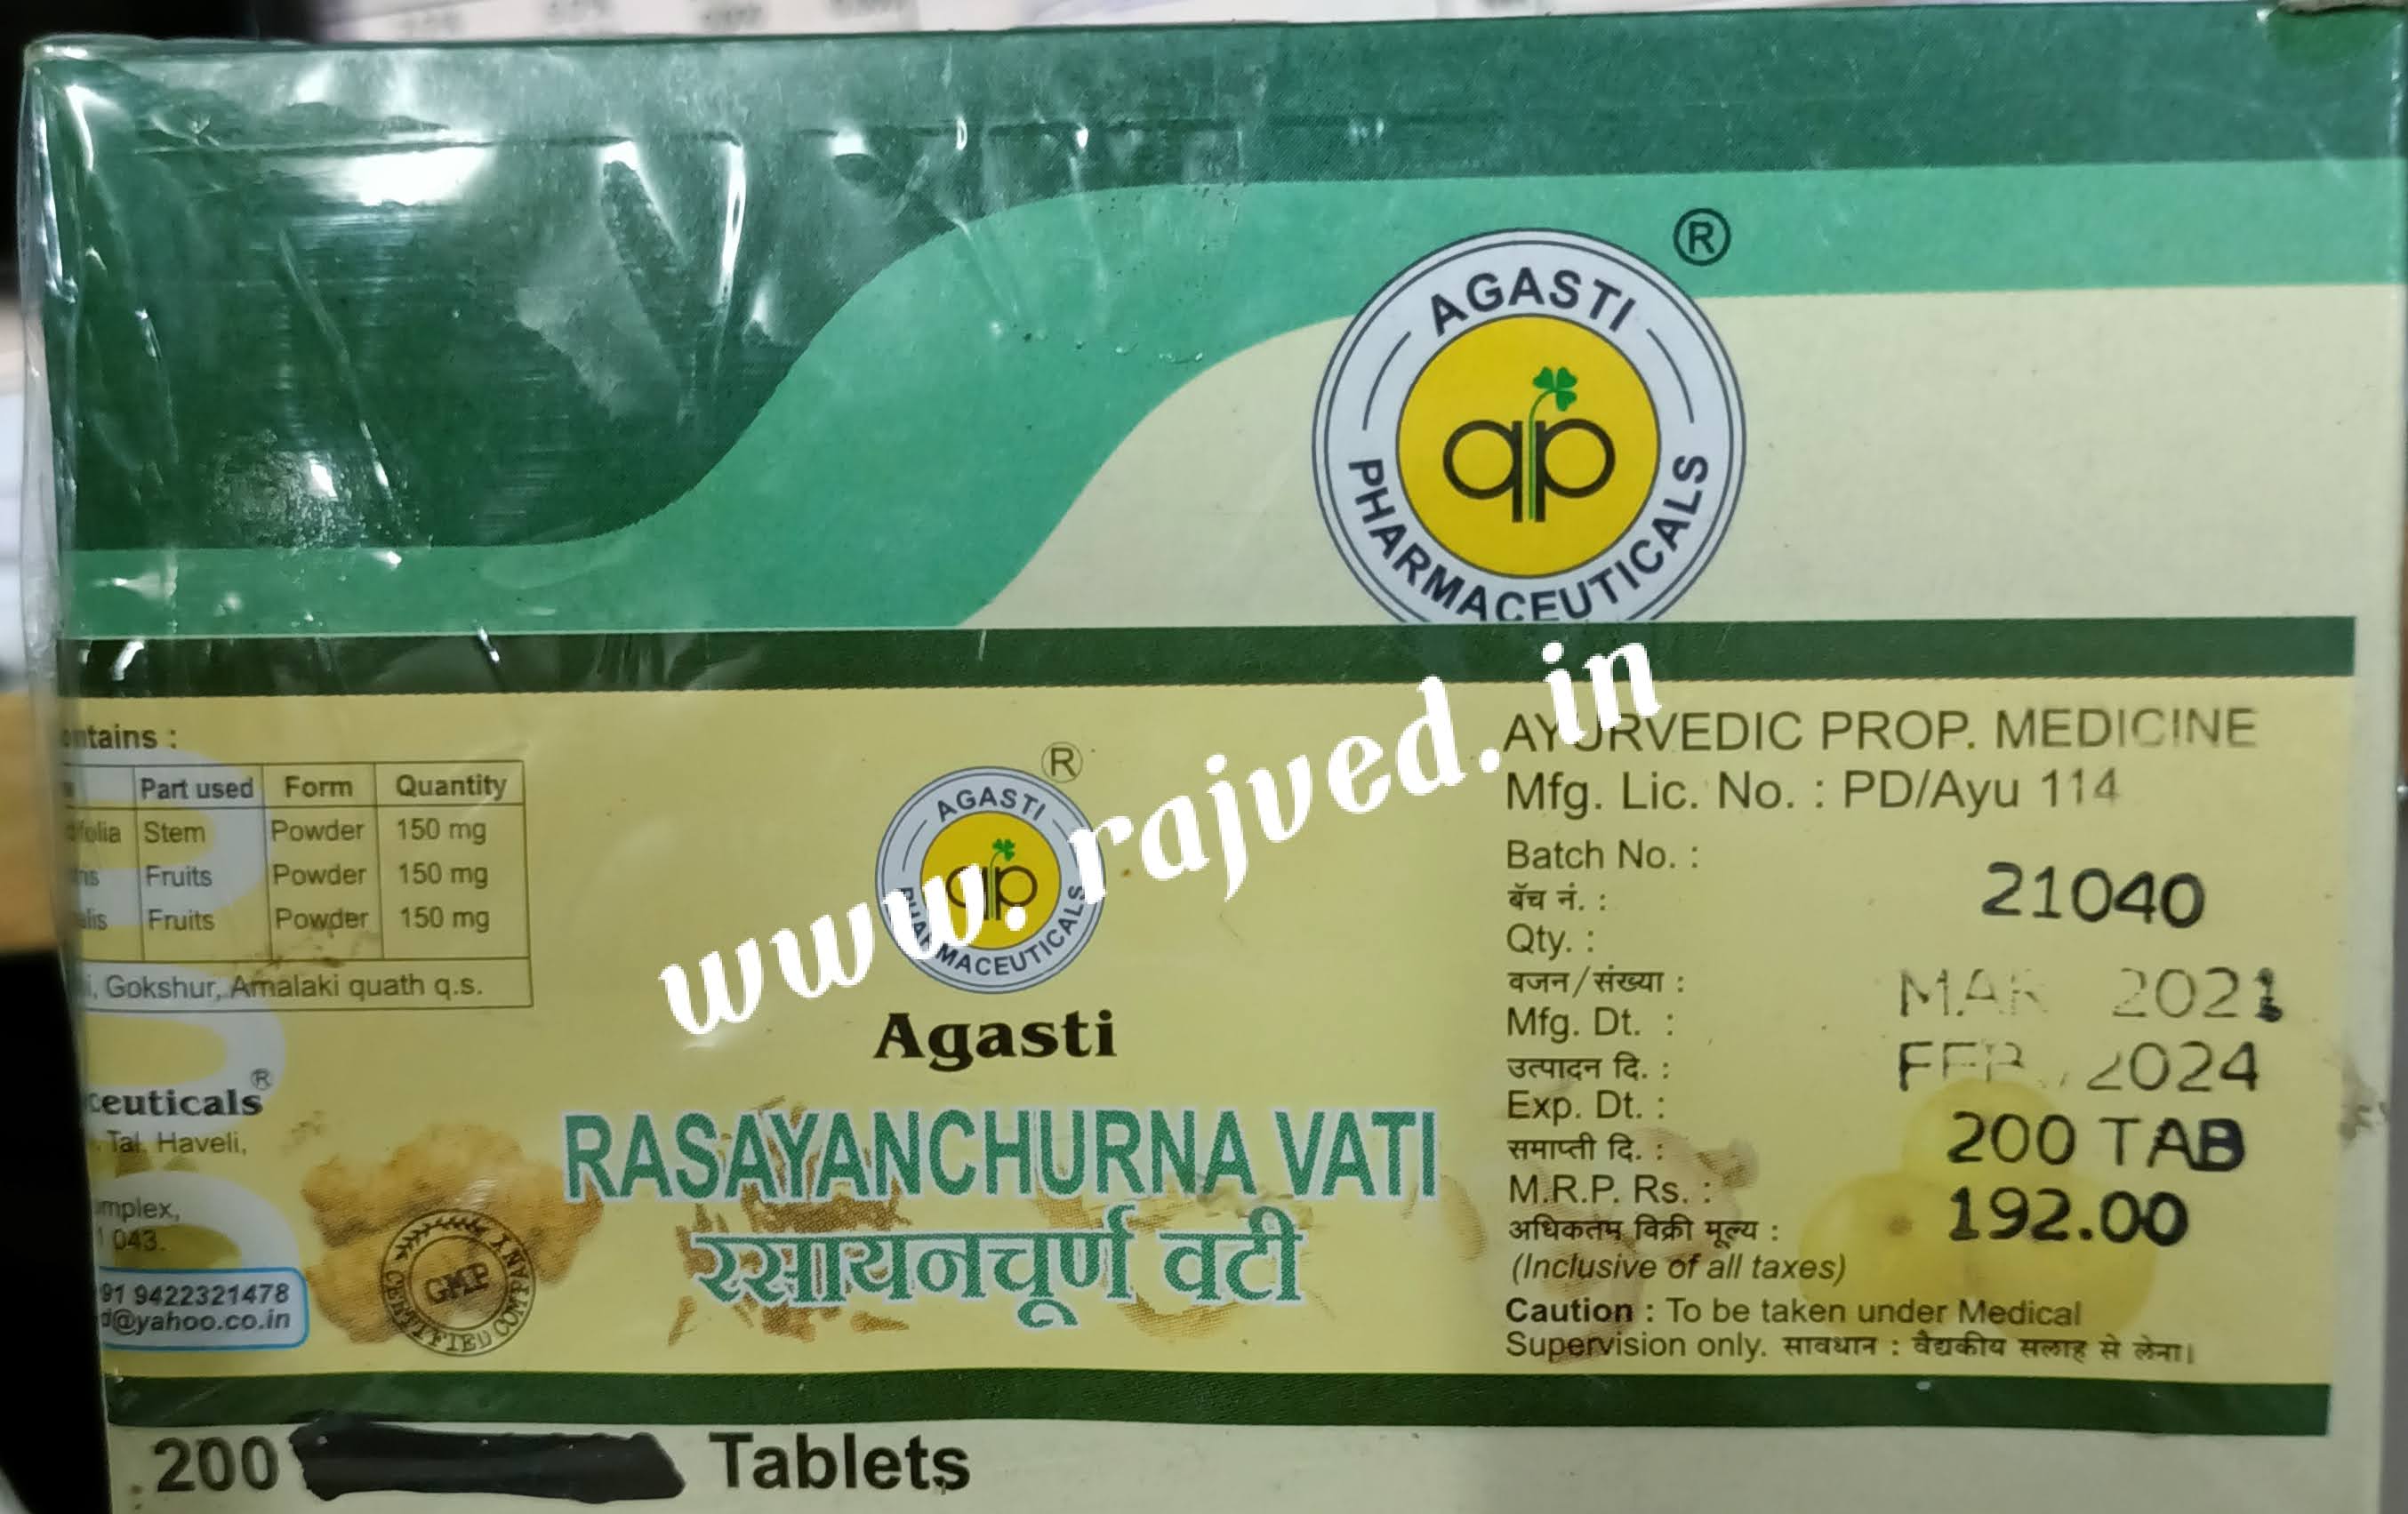 rasayan churna vati tablets 120tabs agasti pharmaceuticals